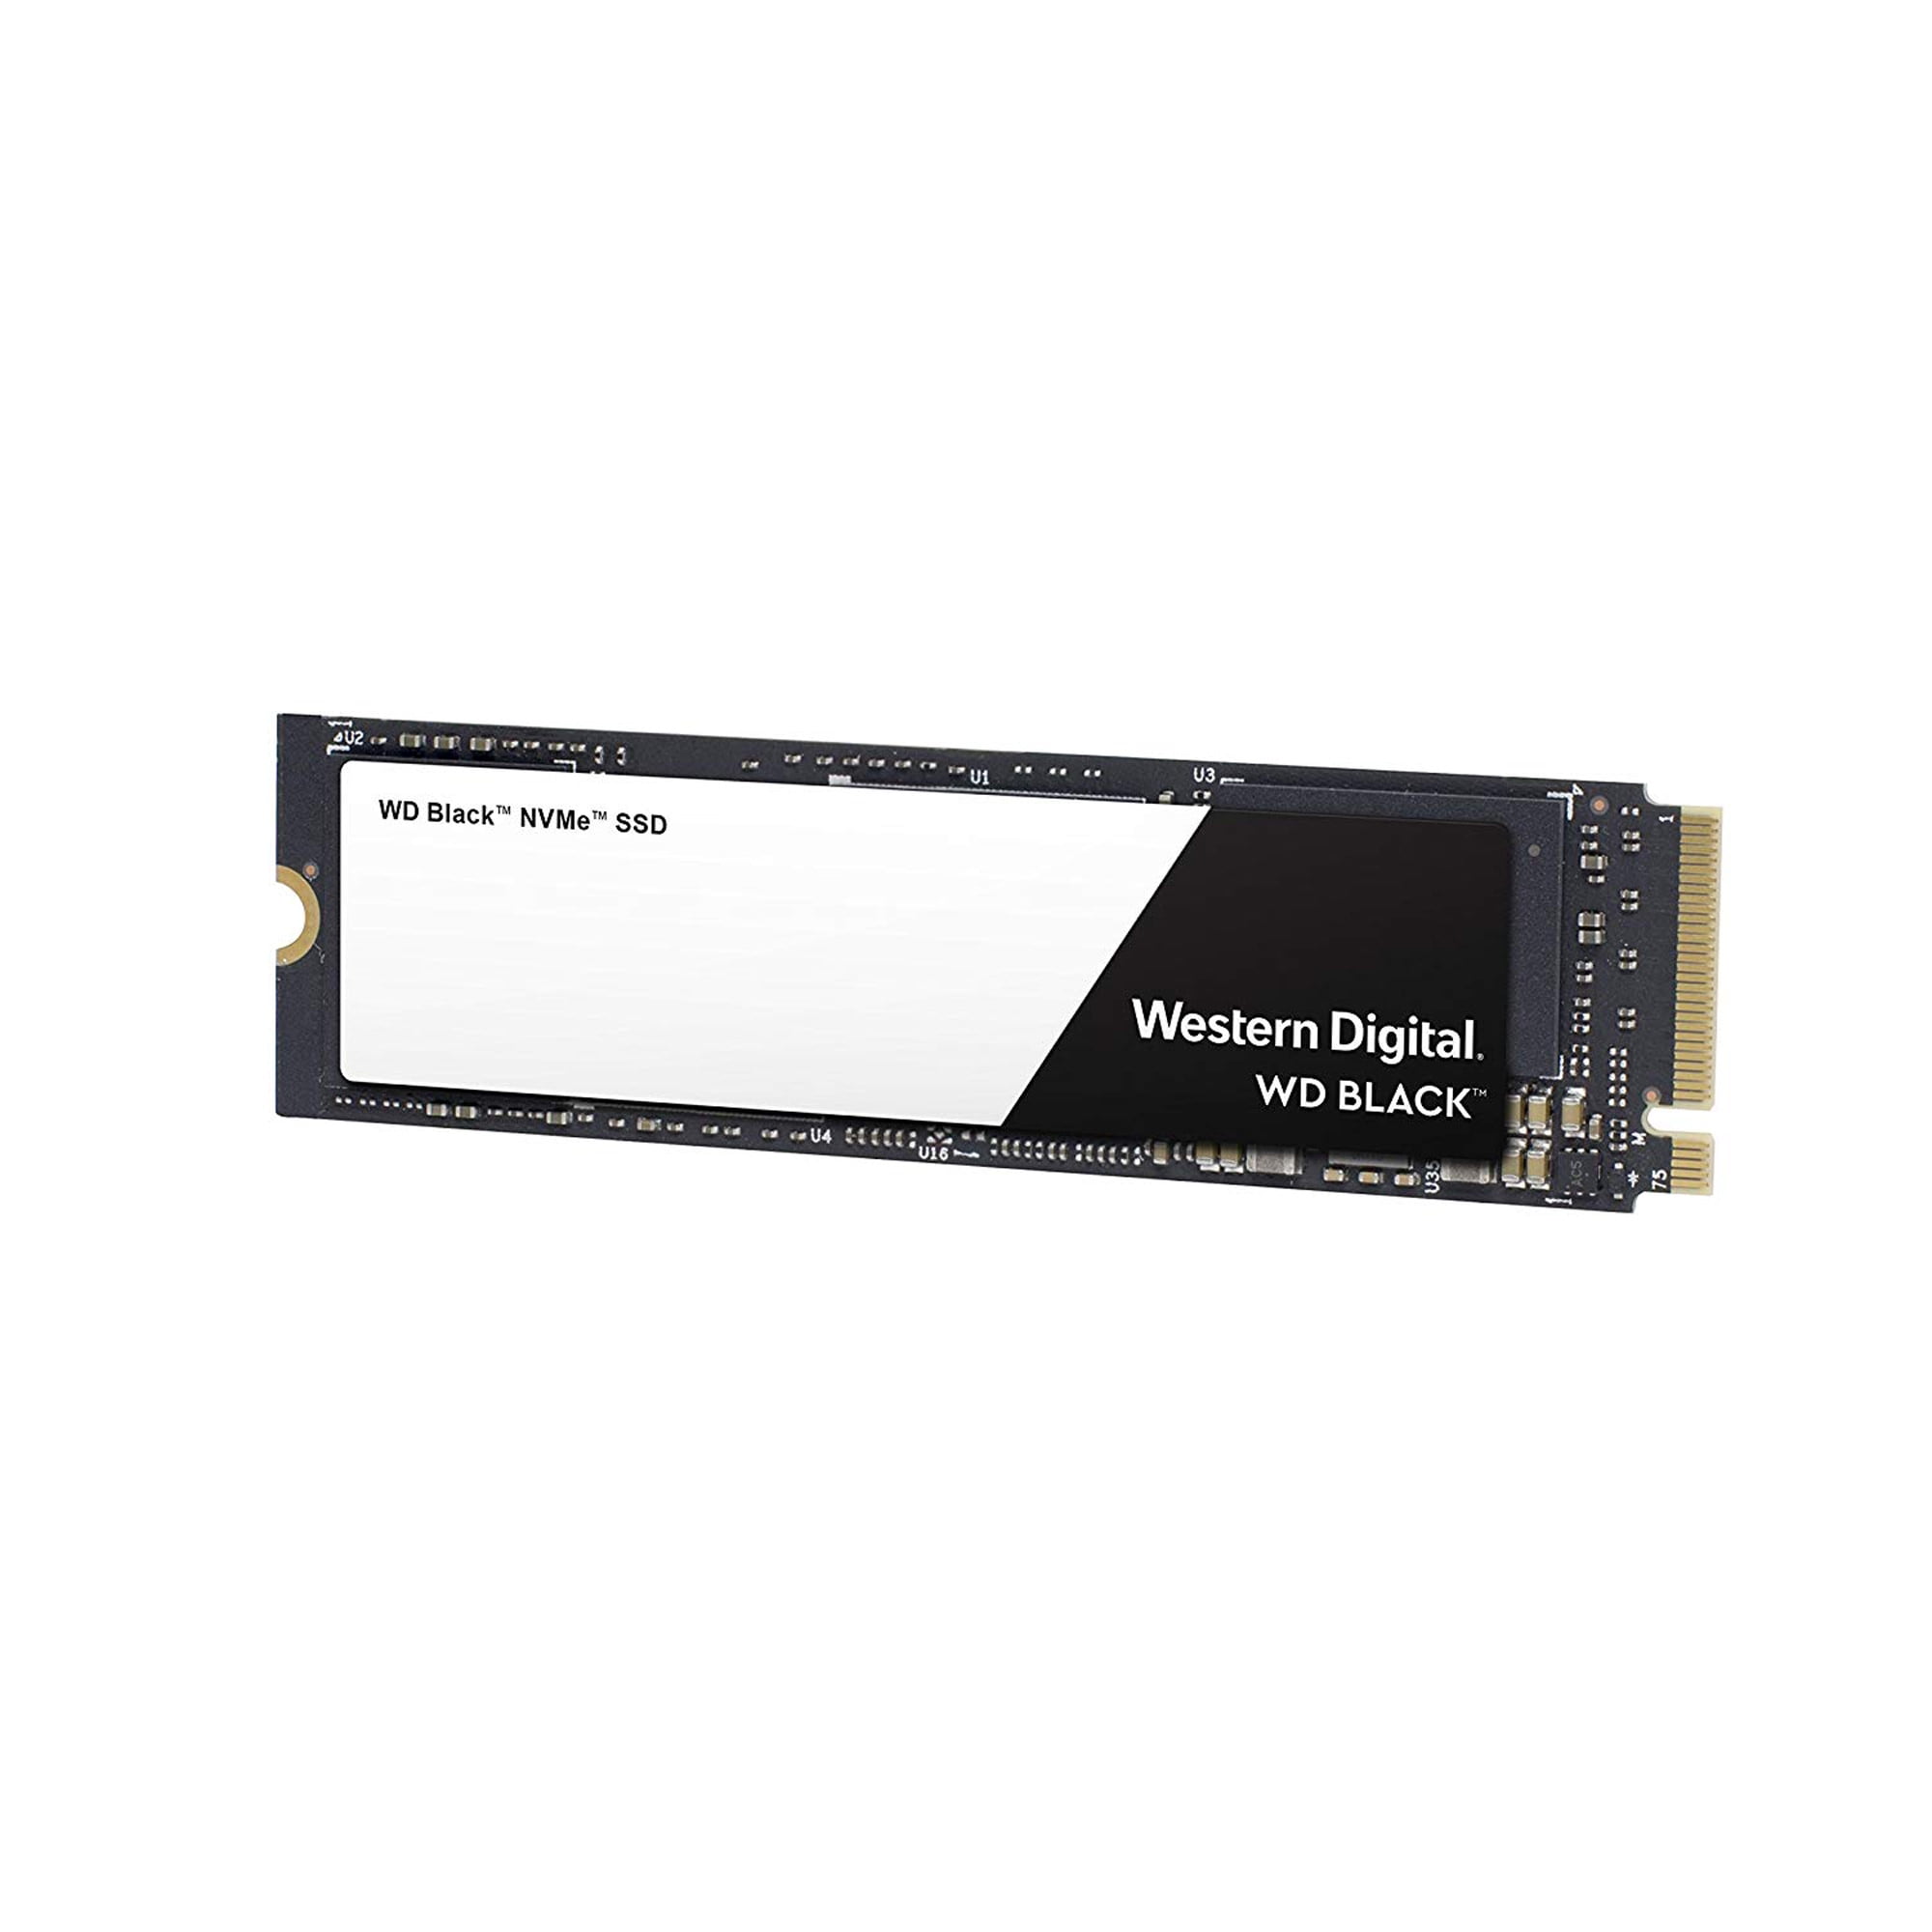 aktivitet svulst margen WD BLACK NVME SSD, 1TB PCIE GEN3 M.2 SSD - Walmart.com